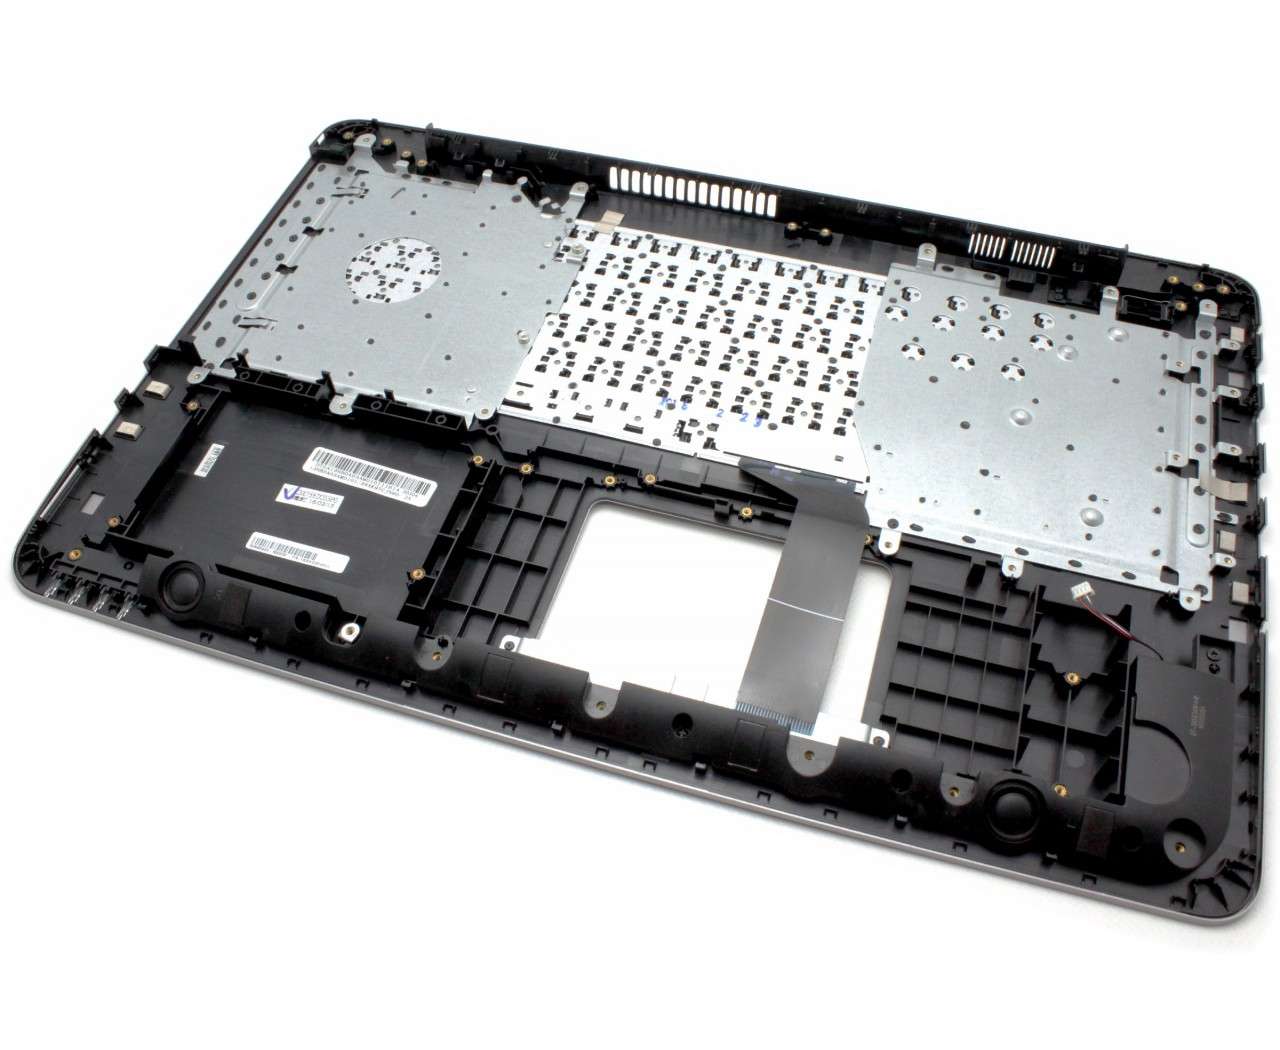 Discover the product Tastatura Asus K756U neagra cu Palmrest argintiu from powerlaptop.ro